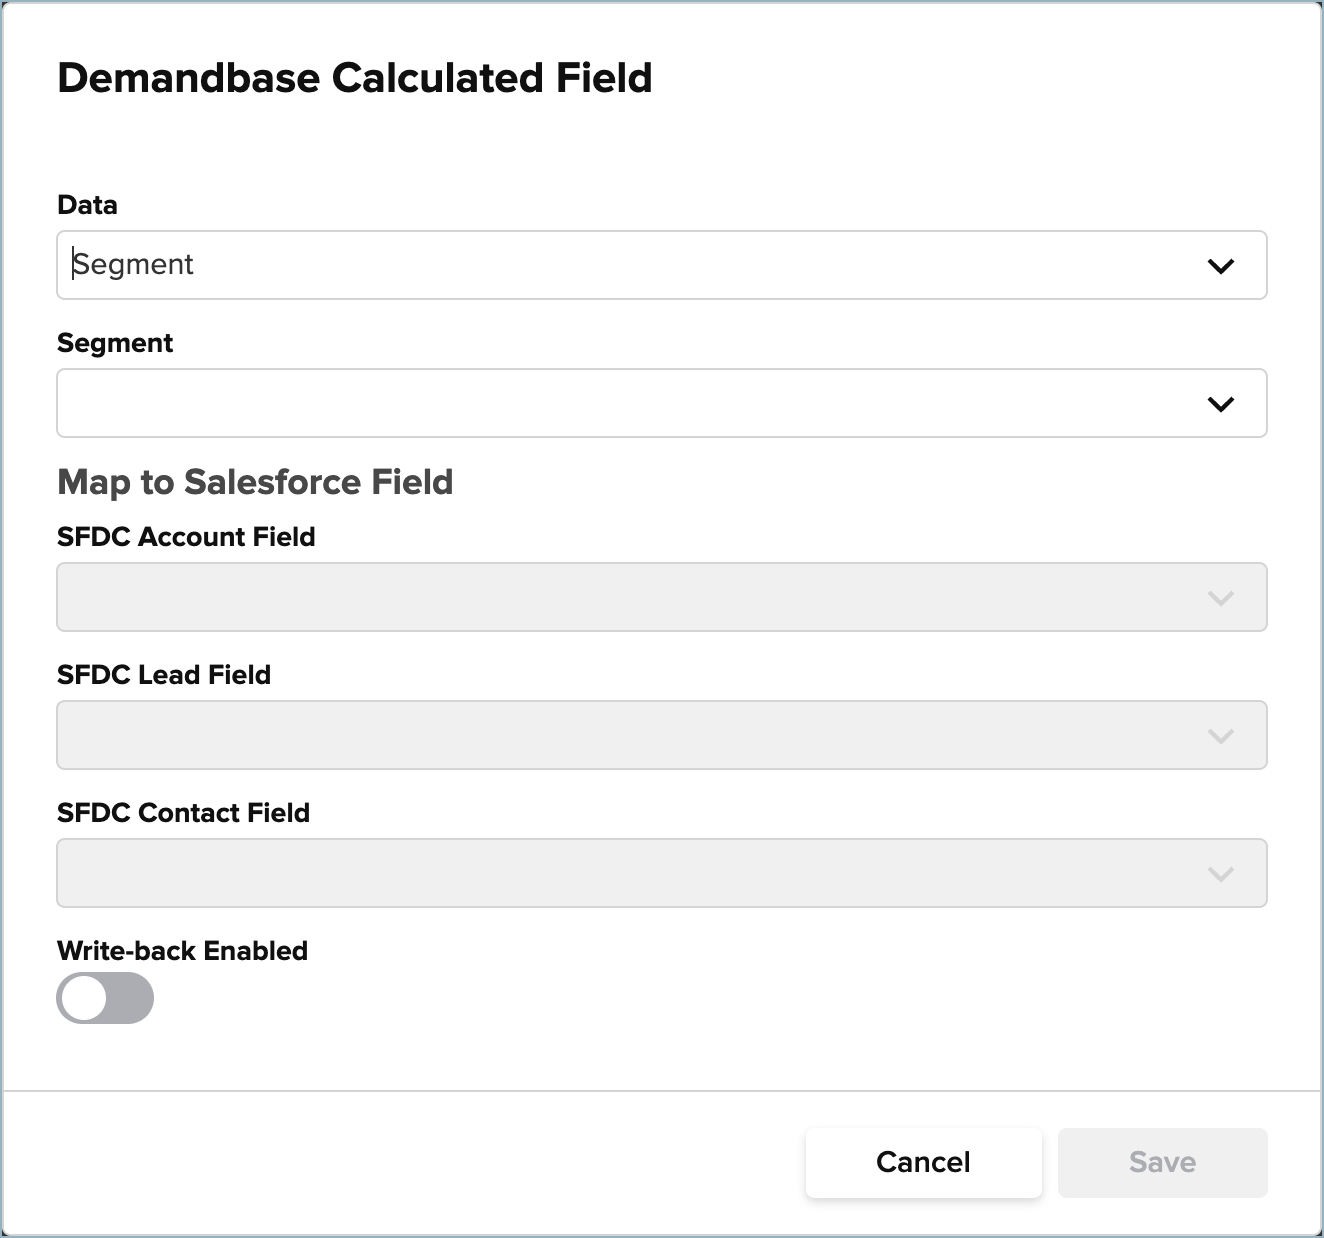 Demandbase_Calculated_Field.png